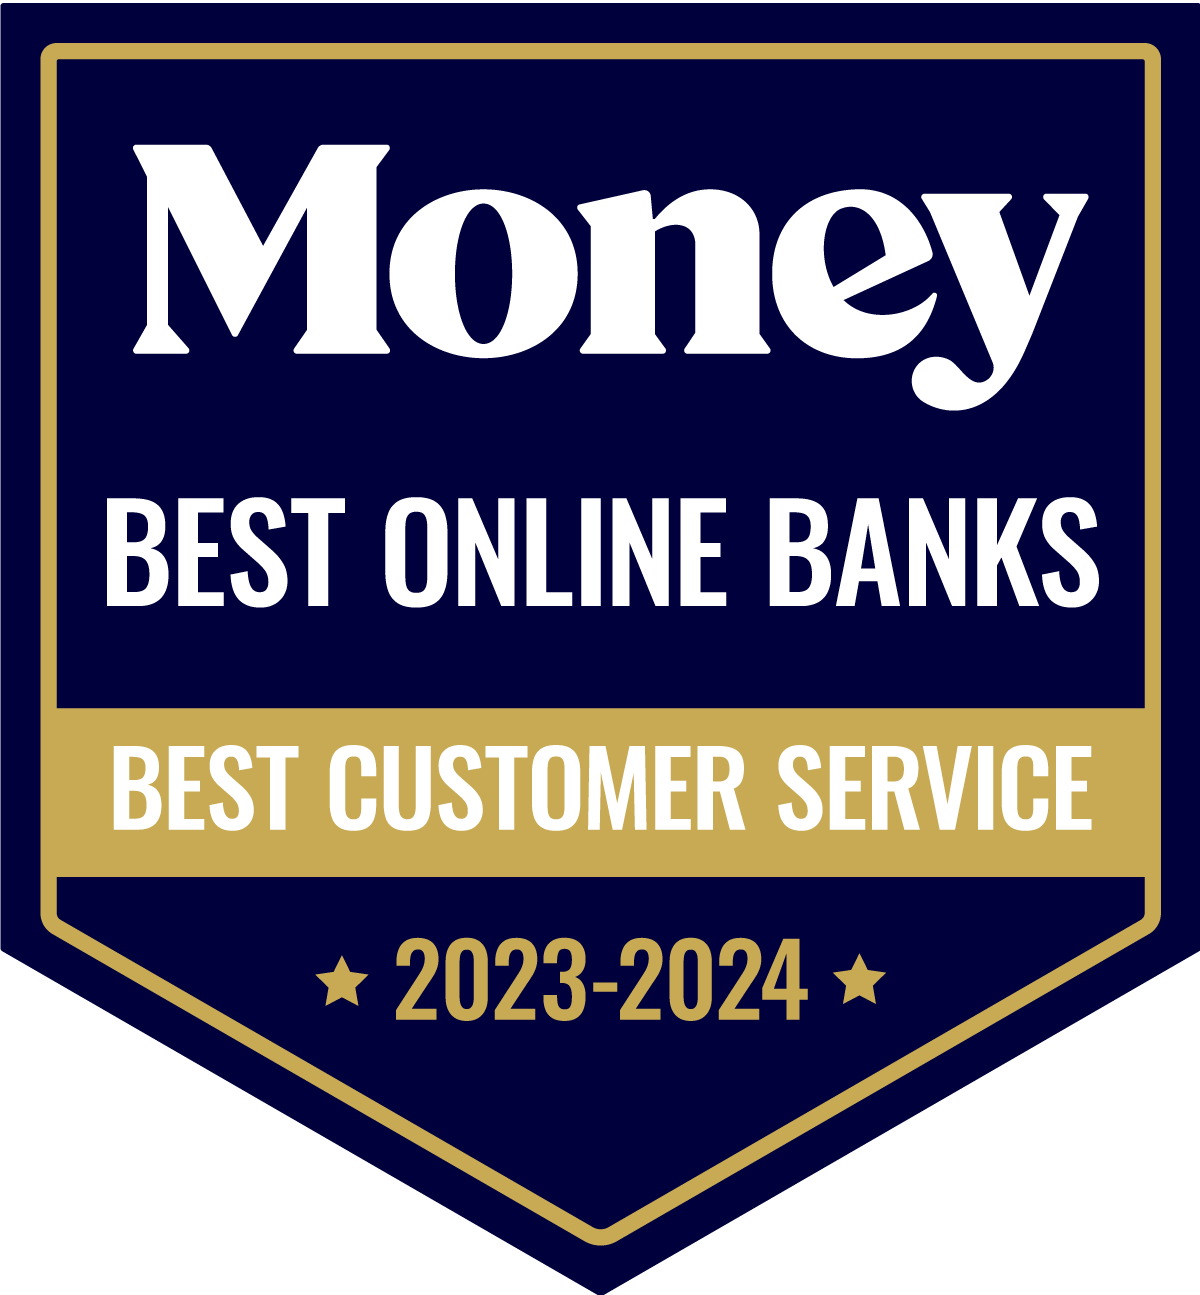 Money magazine emblem with text "Best Online Banks 2023-2024"